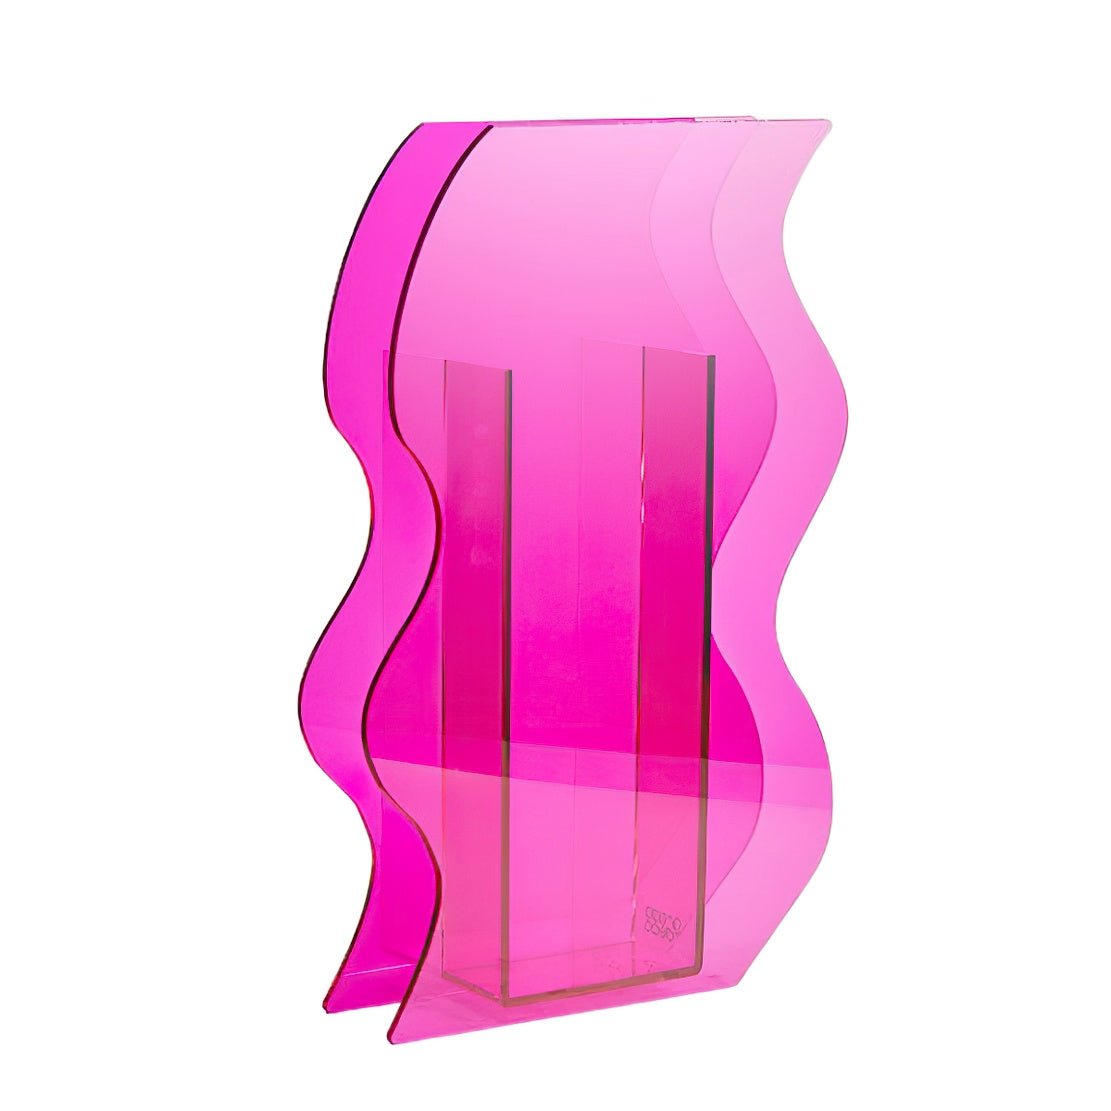 Pink wavy acrylic decorative vase